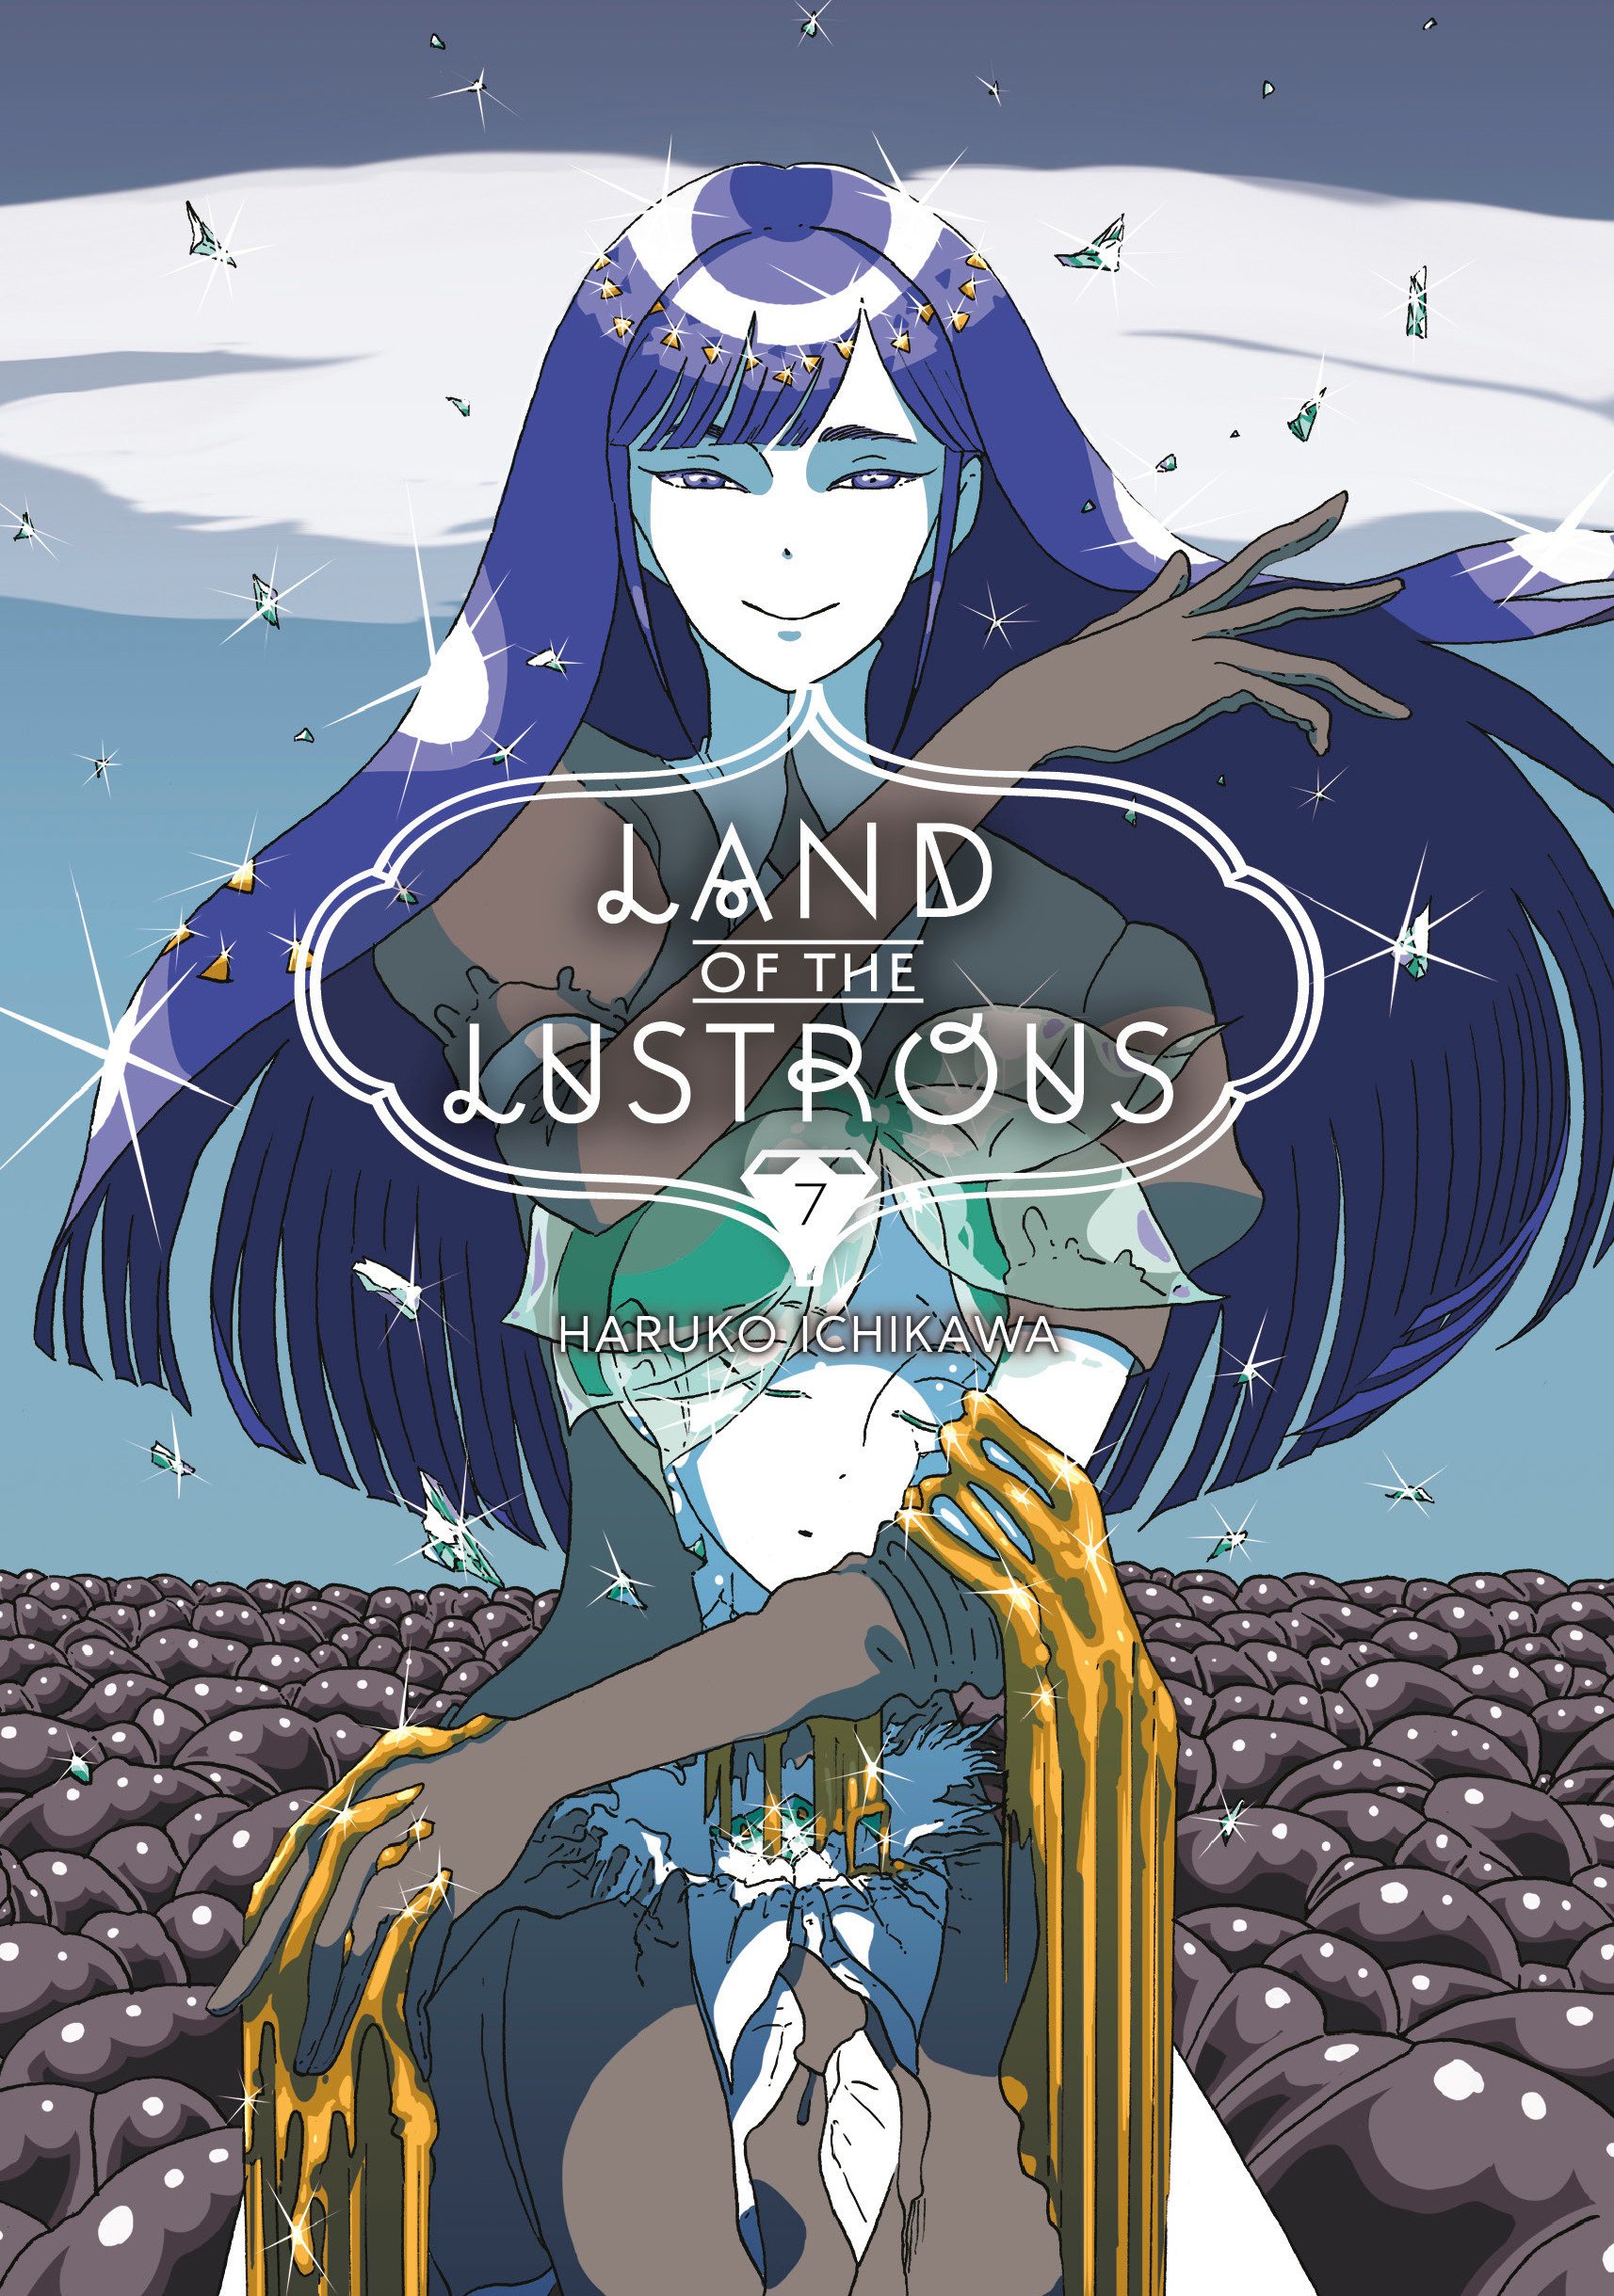 Land of the Lustrous - Volume 7 | Haruko Ichikawa image5